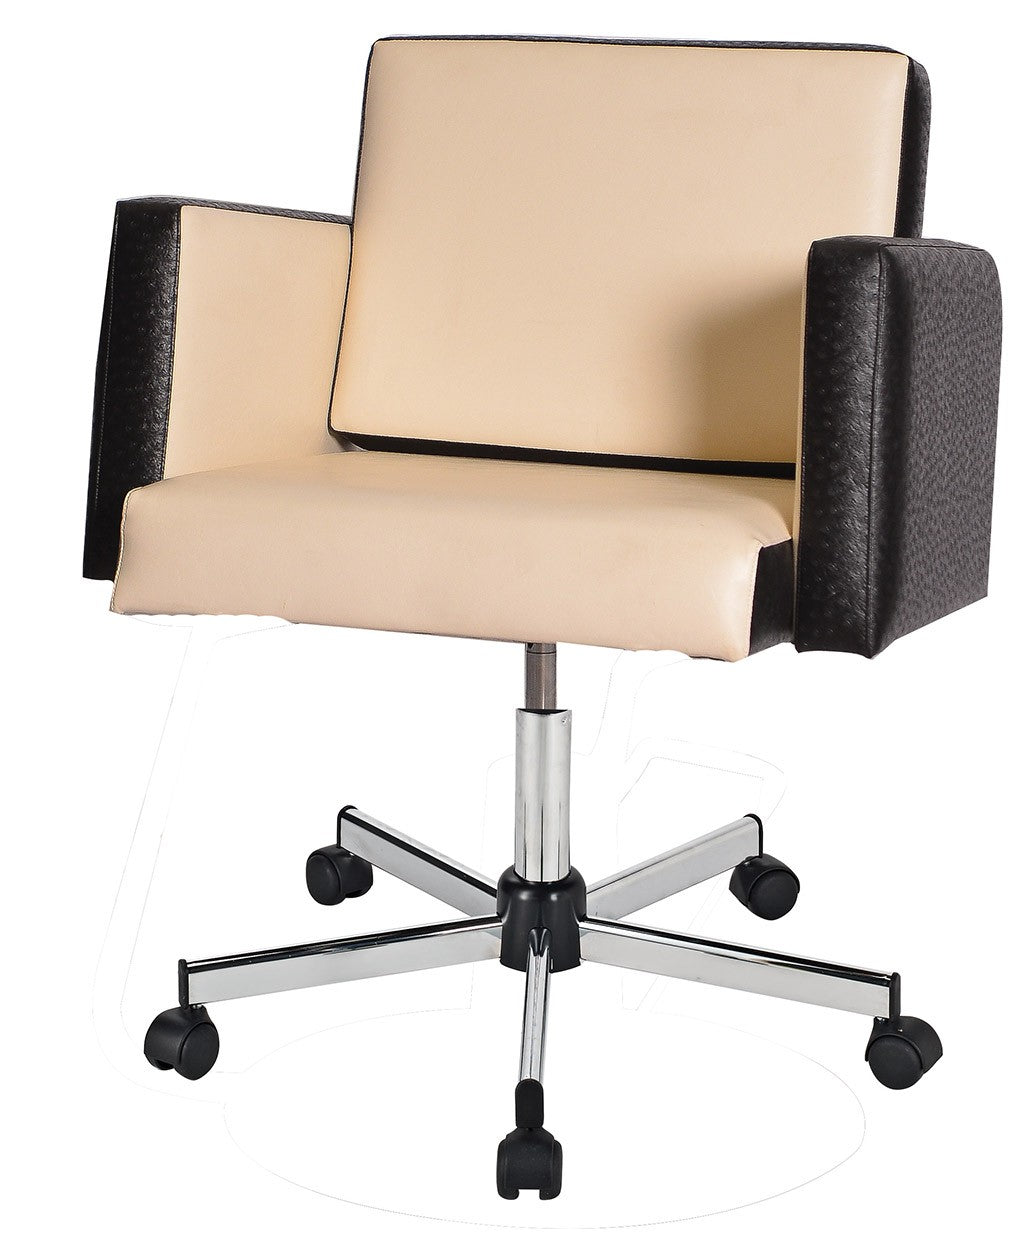 Pibbs Cosmo Desk Chair